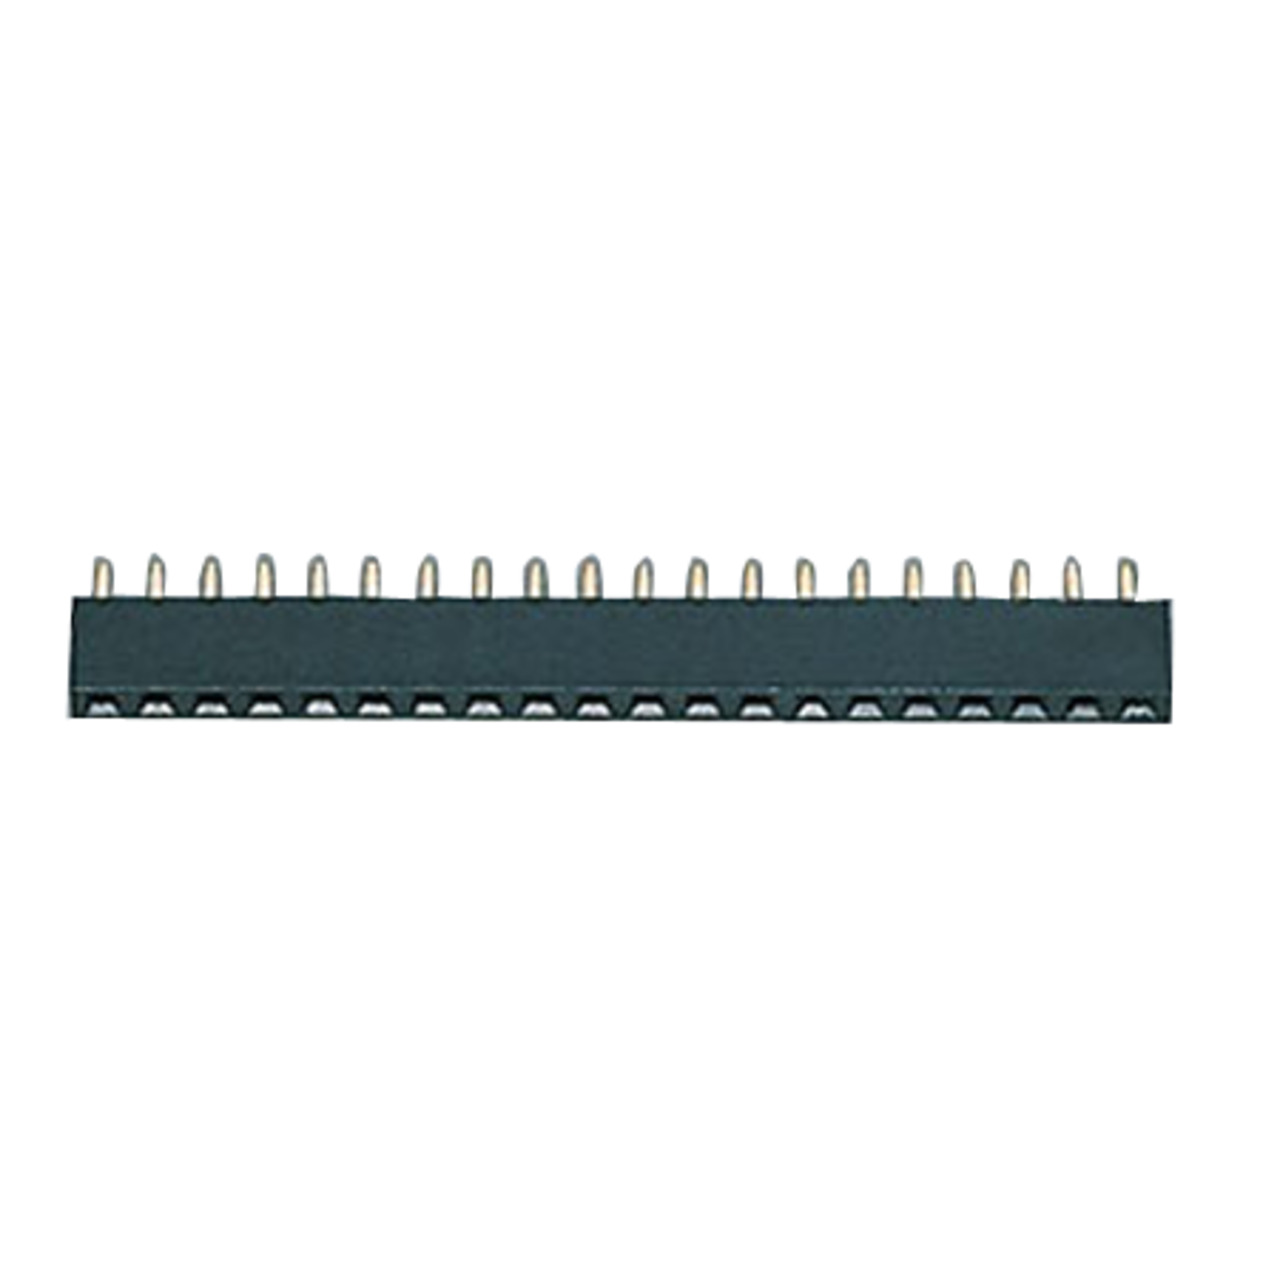 Buchsenleiste- 1x 64-polig- Krperhhe 4-2 mm- gerade- trennbar- gedrehte Kontakte